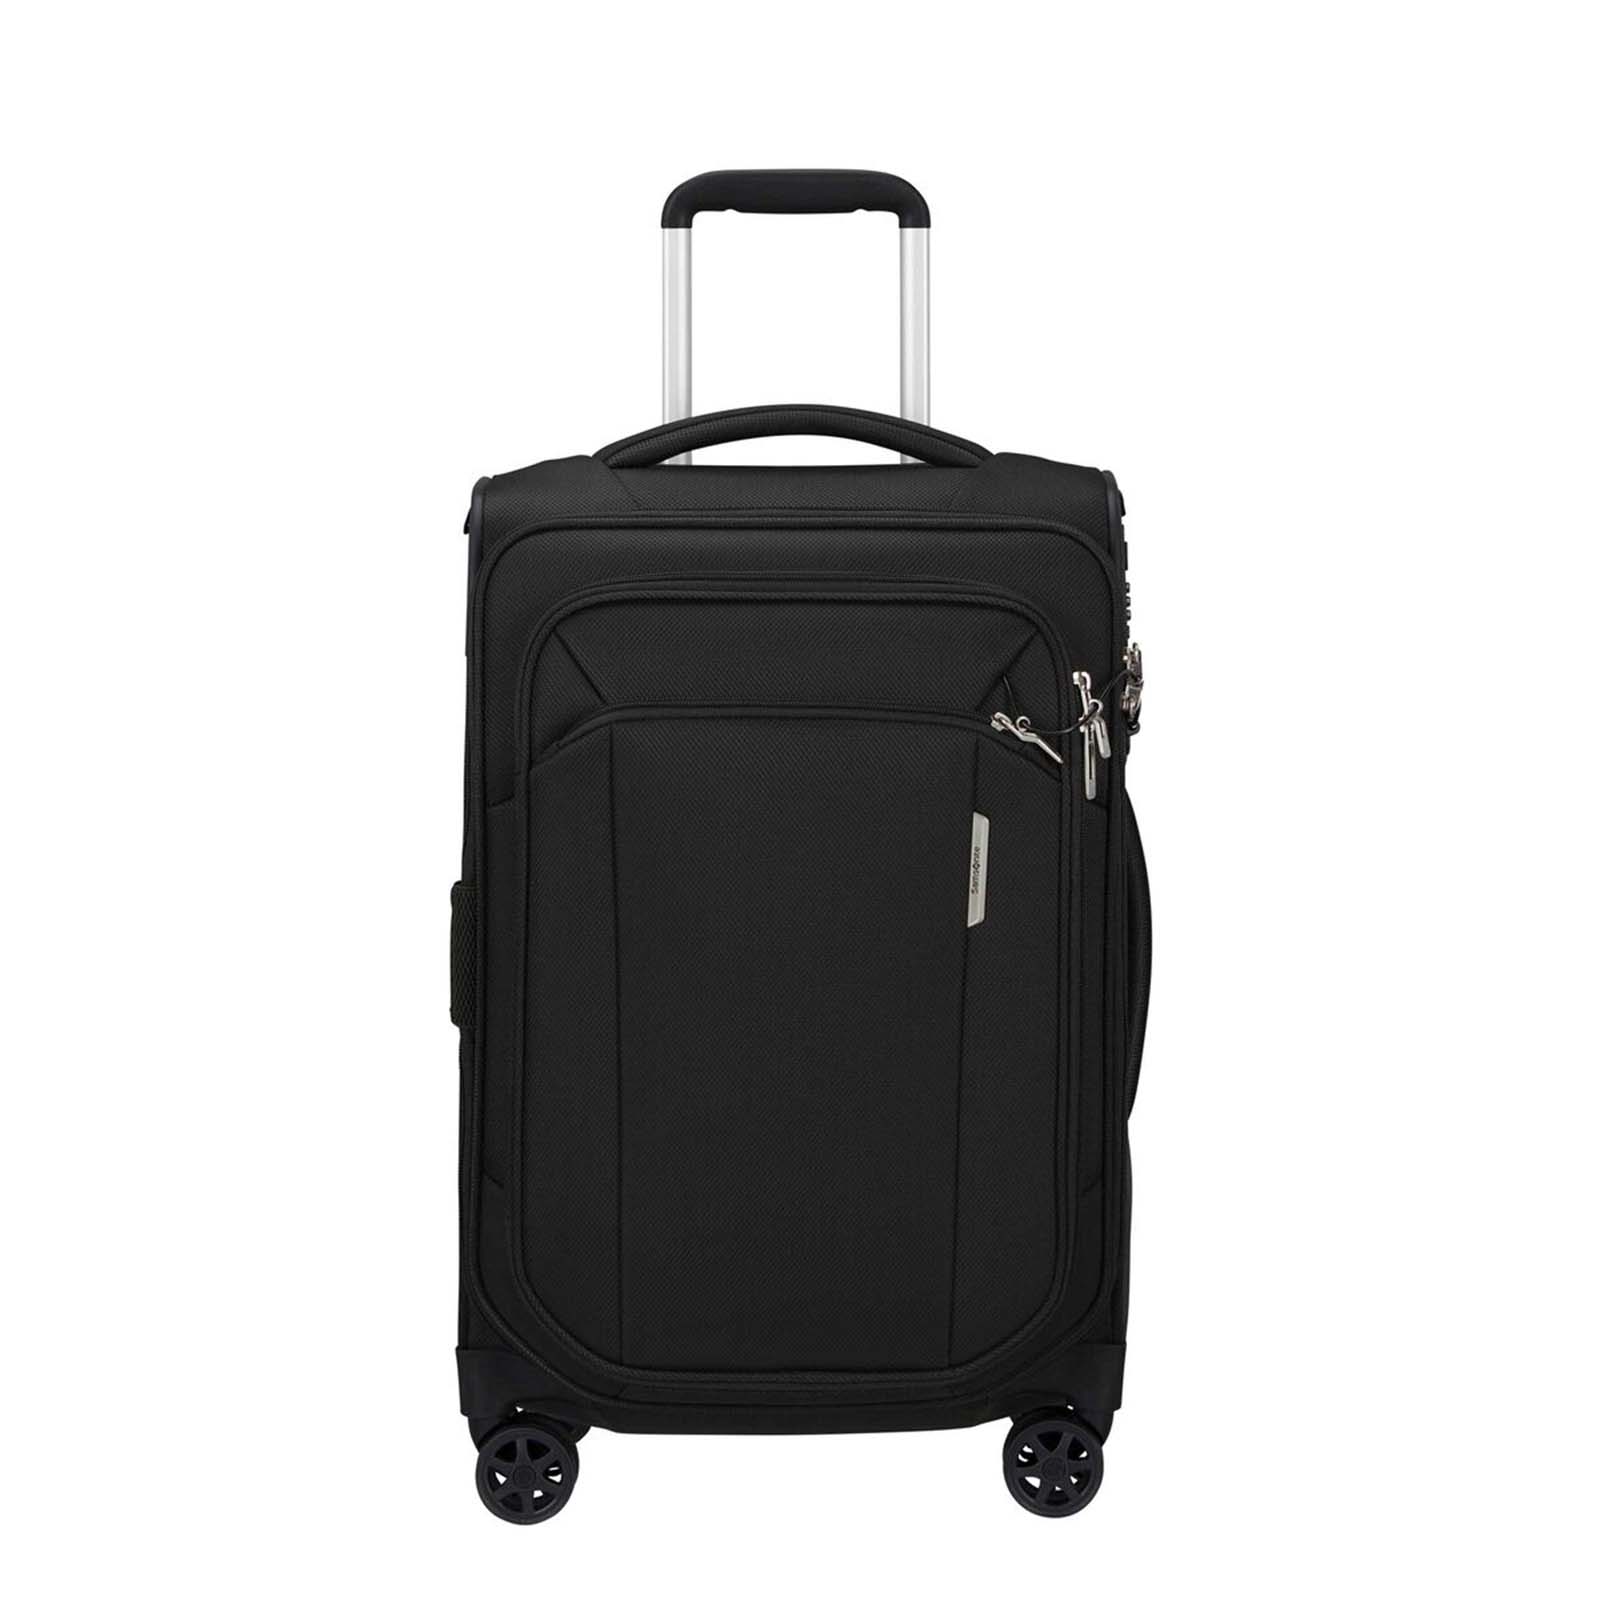 Samsonite-Respark-55cm-Carry-On-Suitcase-Ozone-Black-Front